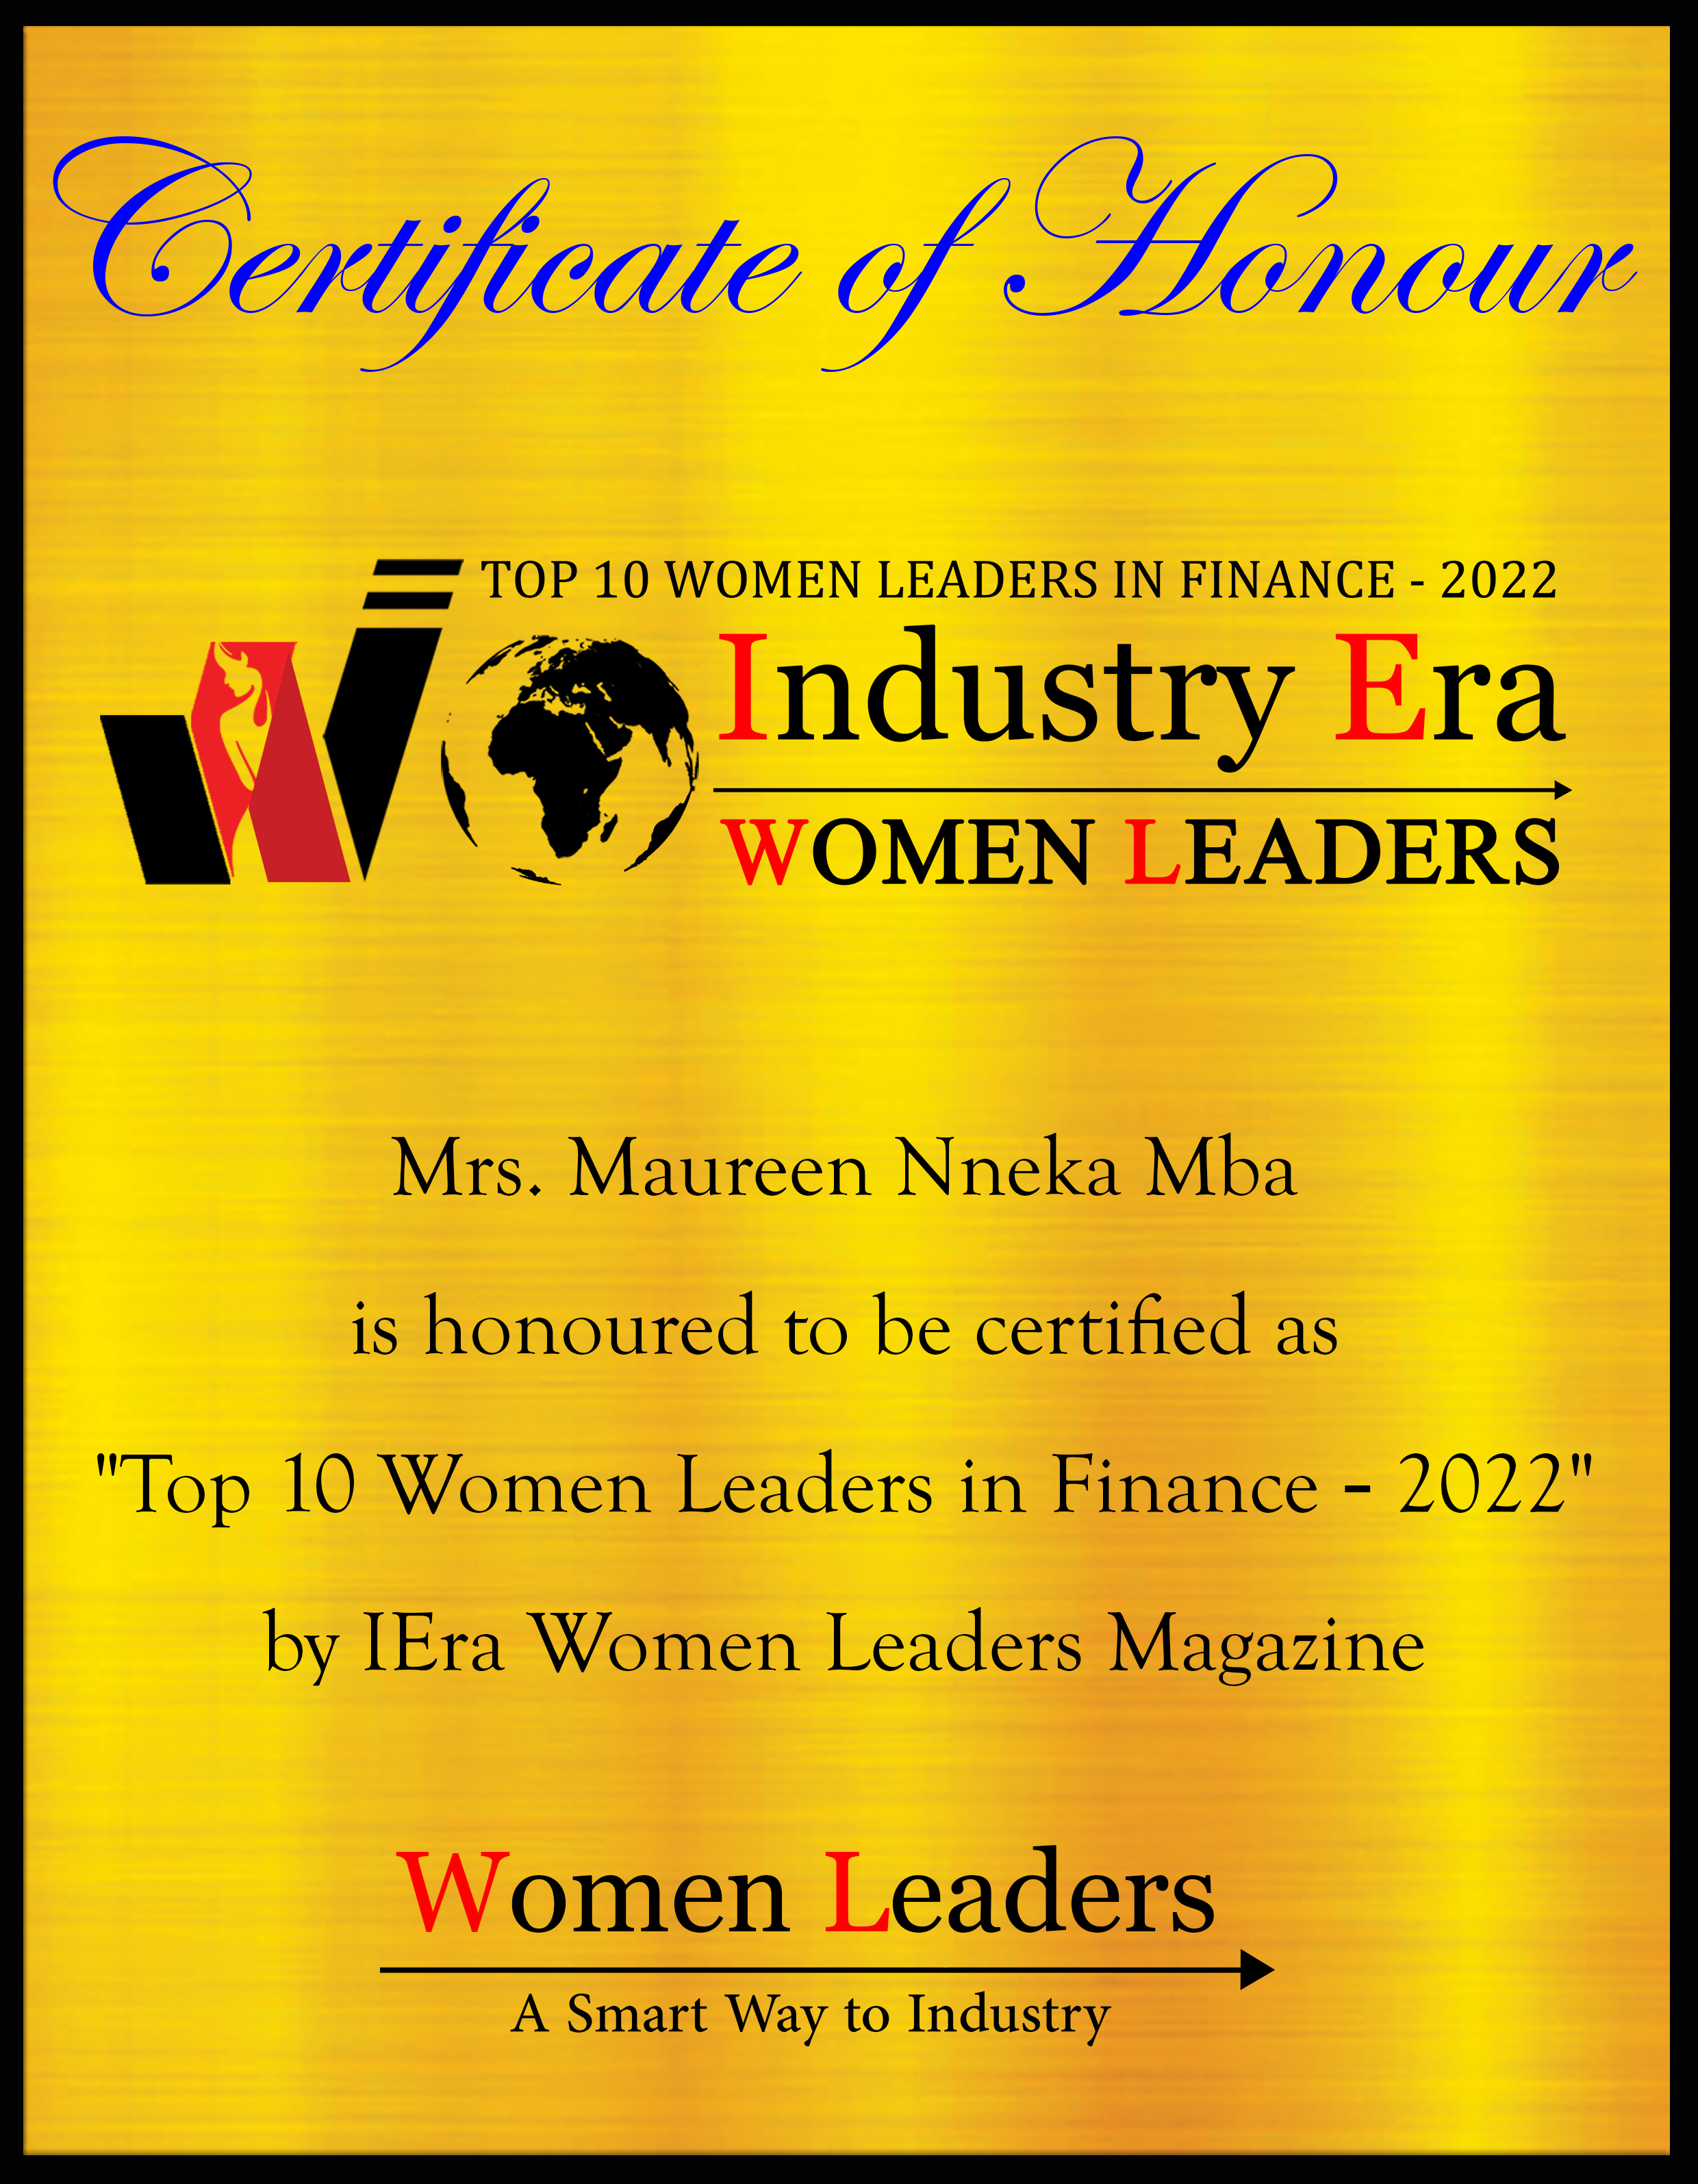 Mrs. Maureen Nneka Mba, Head of MANSA Digital Initiative, Top 10 Women Leaders in Finance of 2022